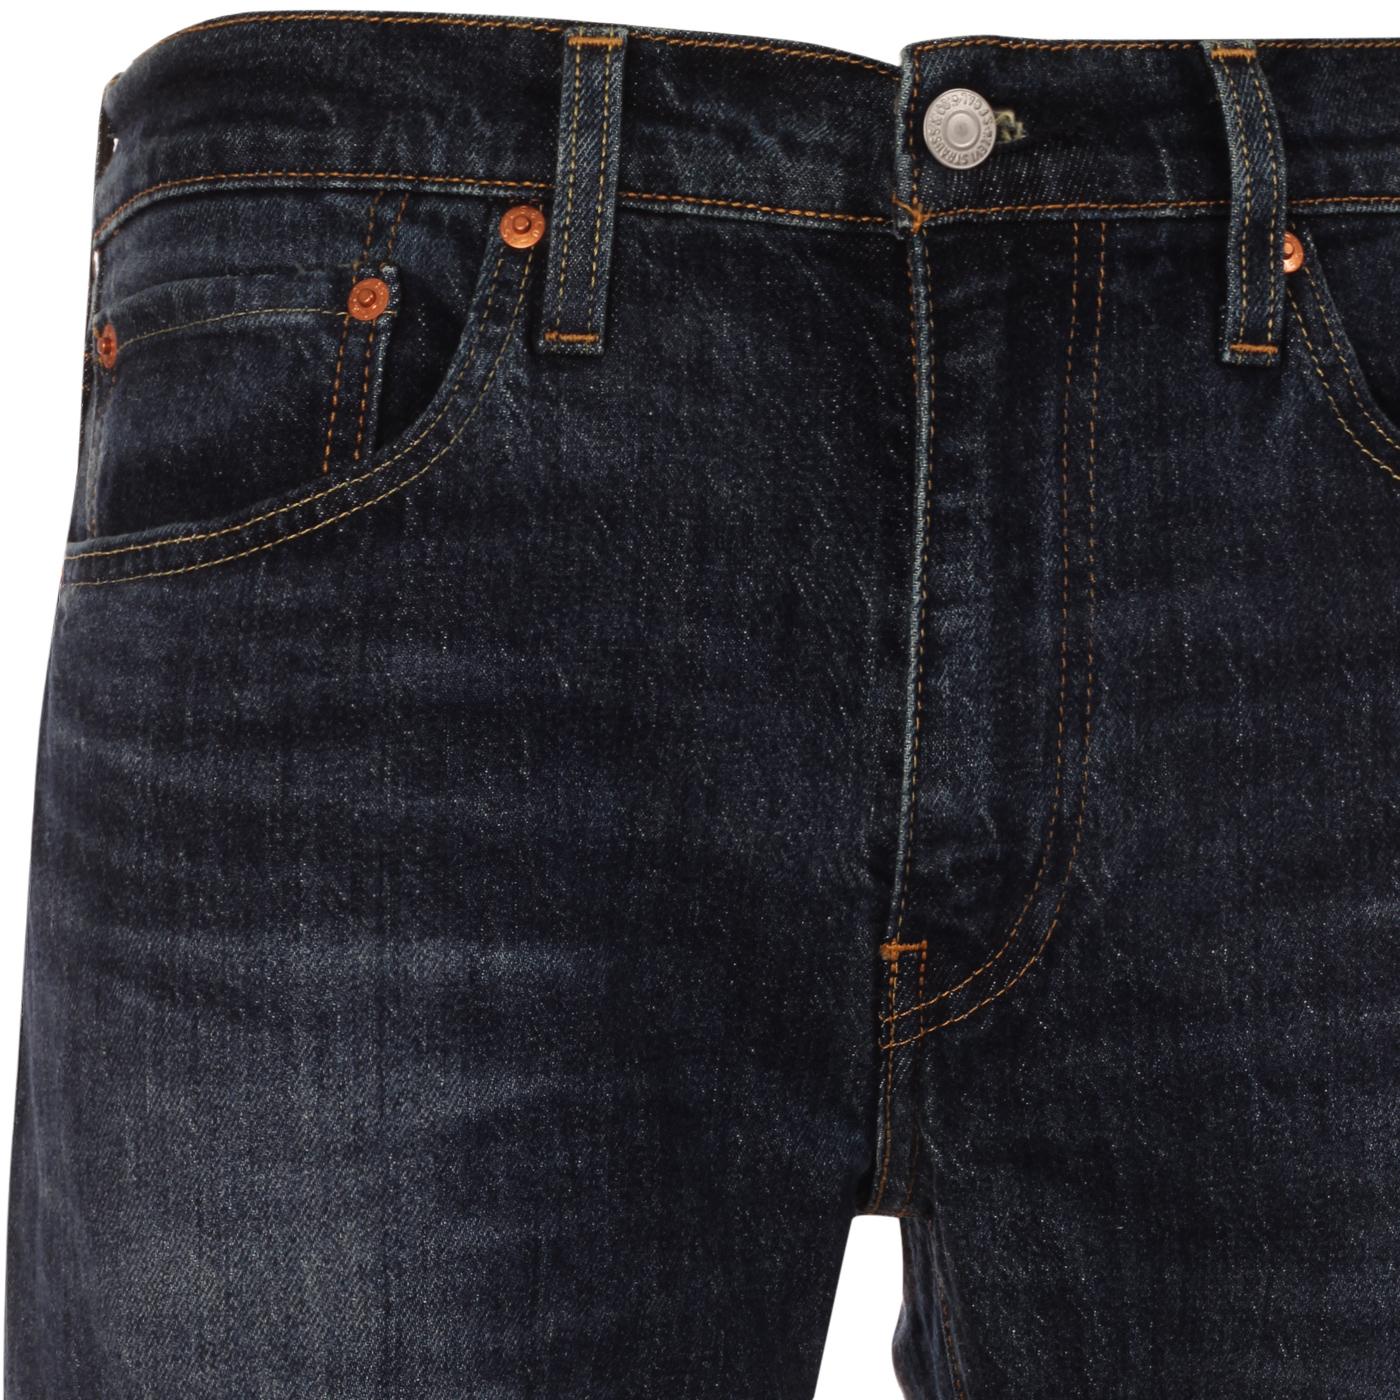 LEVI'S 527 Retro 70s Slim Boot Cut Jeans in Durian Super Tint